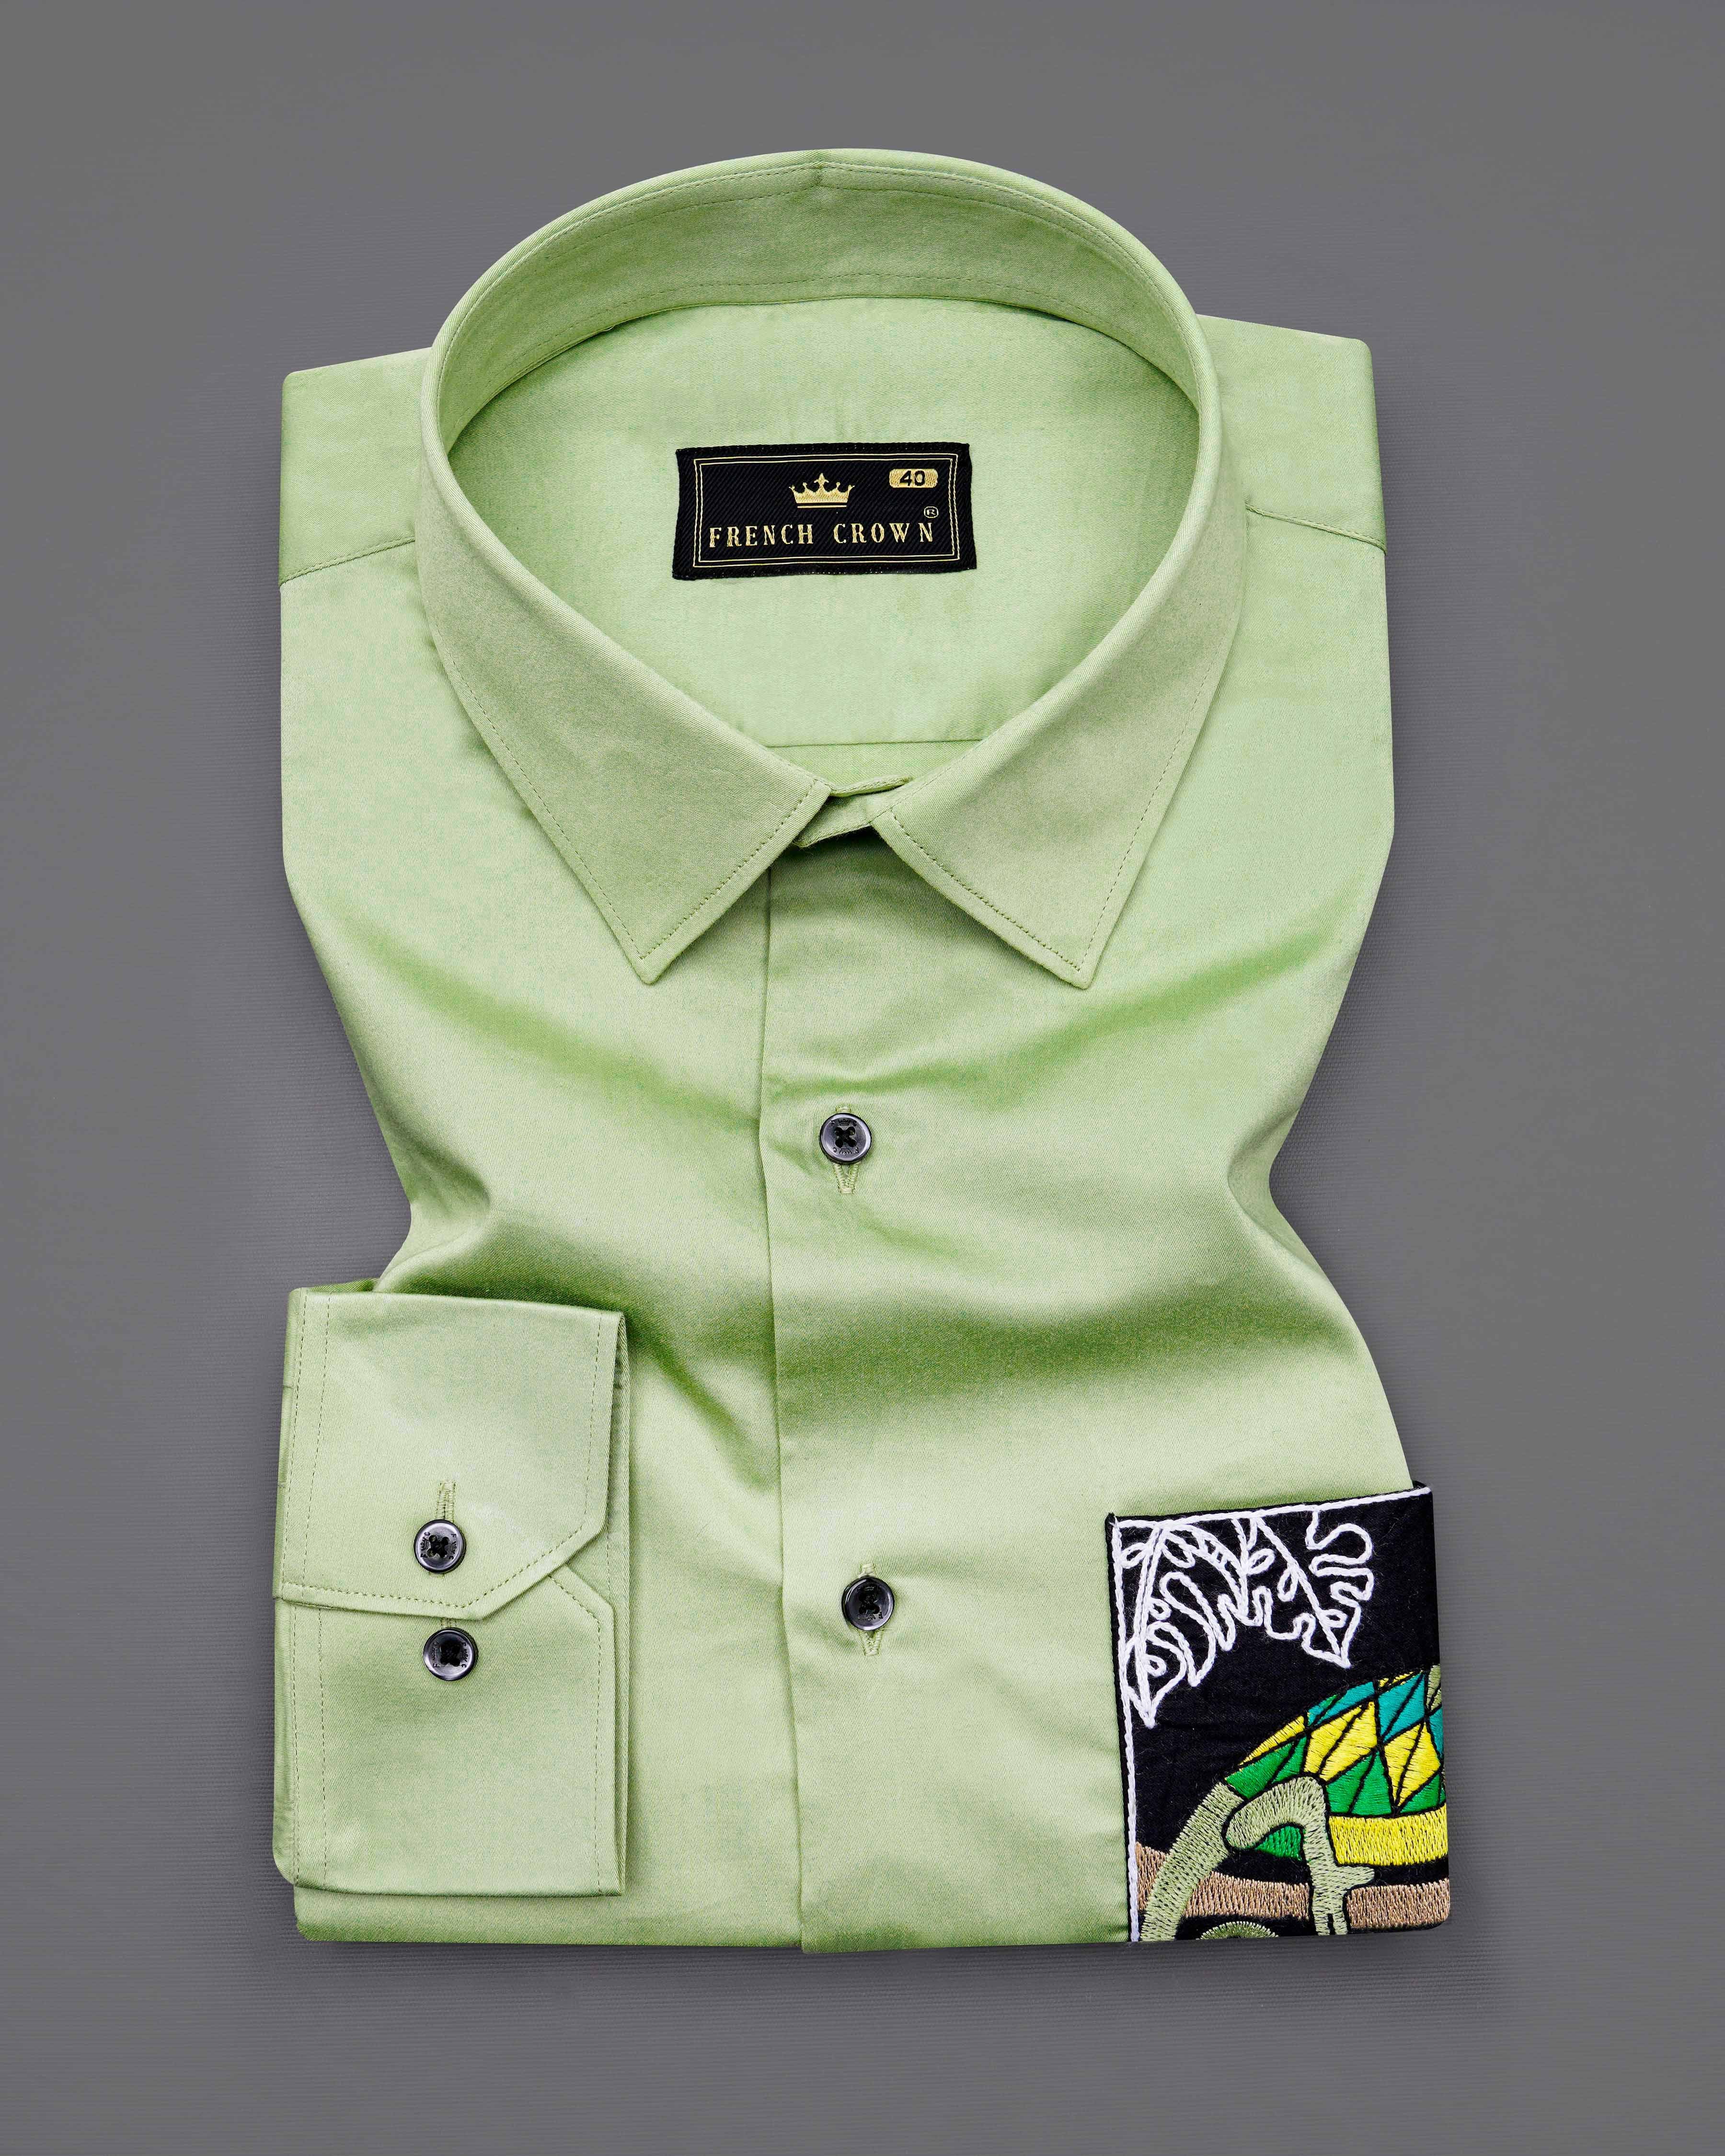 Timberwolf Green with Black Patch Subtle Sheen Pocket Chameleon Embroidered  Super Soft Premium Cotton Shirt 8438-BLK-E005-38, 8438-BLK-E005-H-38, 8438-BLK-E005-39, 8438-BLK-E005-H-39, 8438-BLK-E005-40, 8438-BLK-E005-H-40, 8438-BLK-E005-42, 8438-BLK-E005-H-42, 8438-BLK-E005-44, 8438-BLK-E005-H-44, 8438-BLK-E005-46, 8438-BLK-E005-H-46, 8438-BLK-E005-48, 8438-BLK-E005-H-48, 8438-BLK-E005-50, 8438-BLK-E005-H-50, 8438-BLK-E005-52, 8438-BLK-E005-H-52